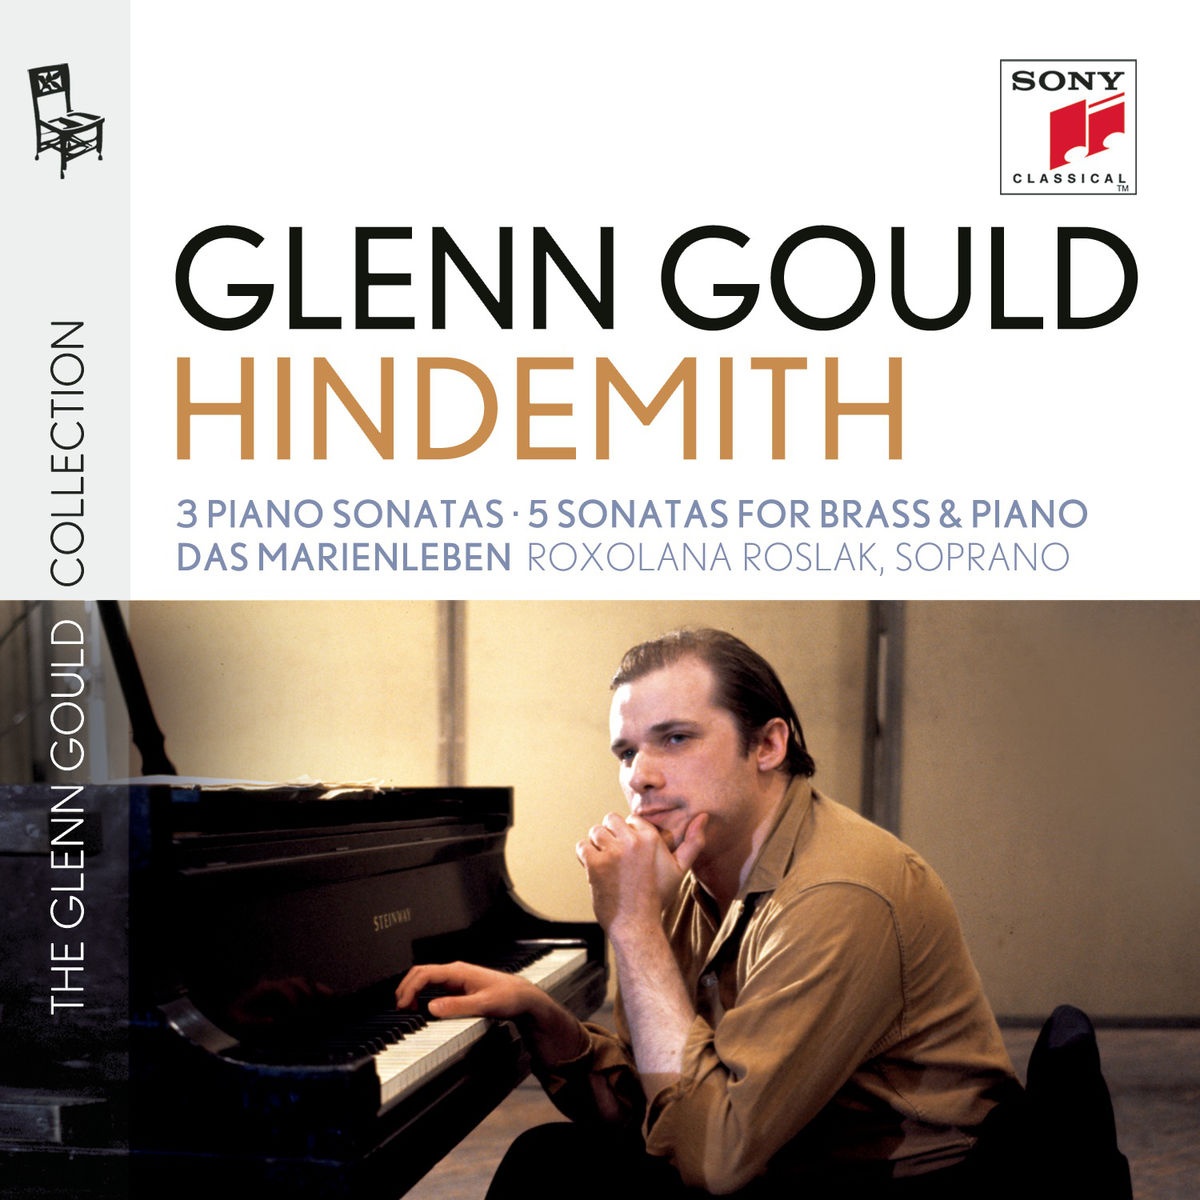 Hindemith: 3 Piano Sonatas, 5 Sonatas for Brass & Piano, Das Marienleben